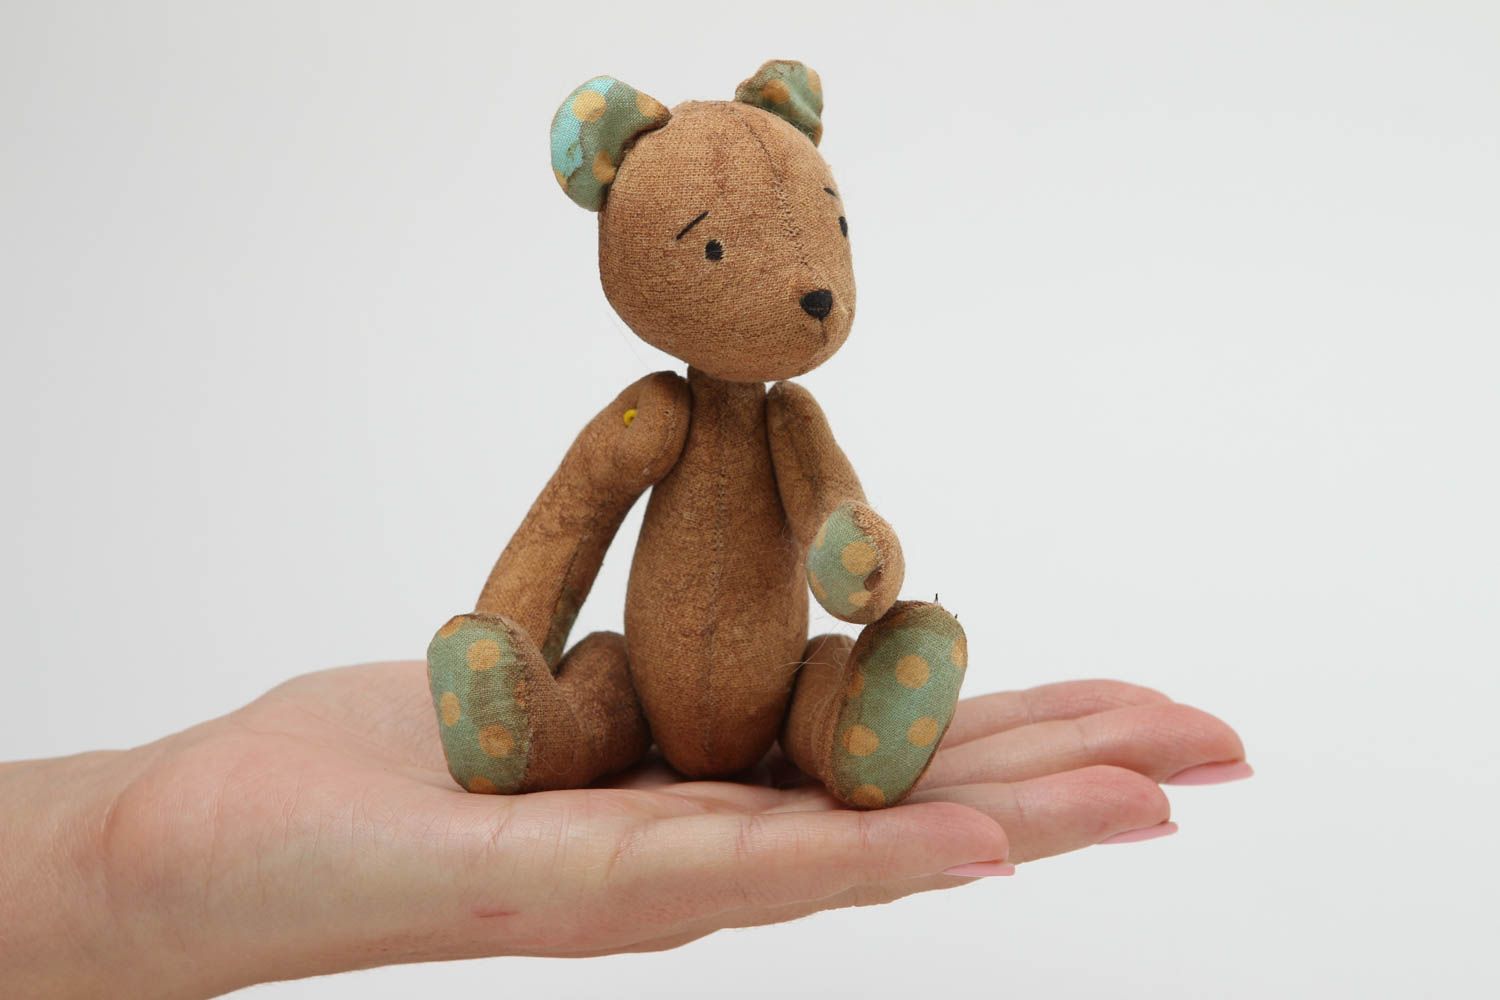 Handmade bear toy vintage toy nursery decor ideas present for children photo 5